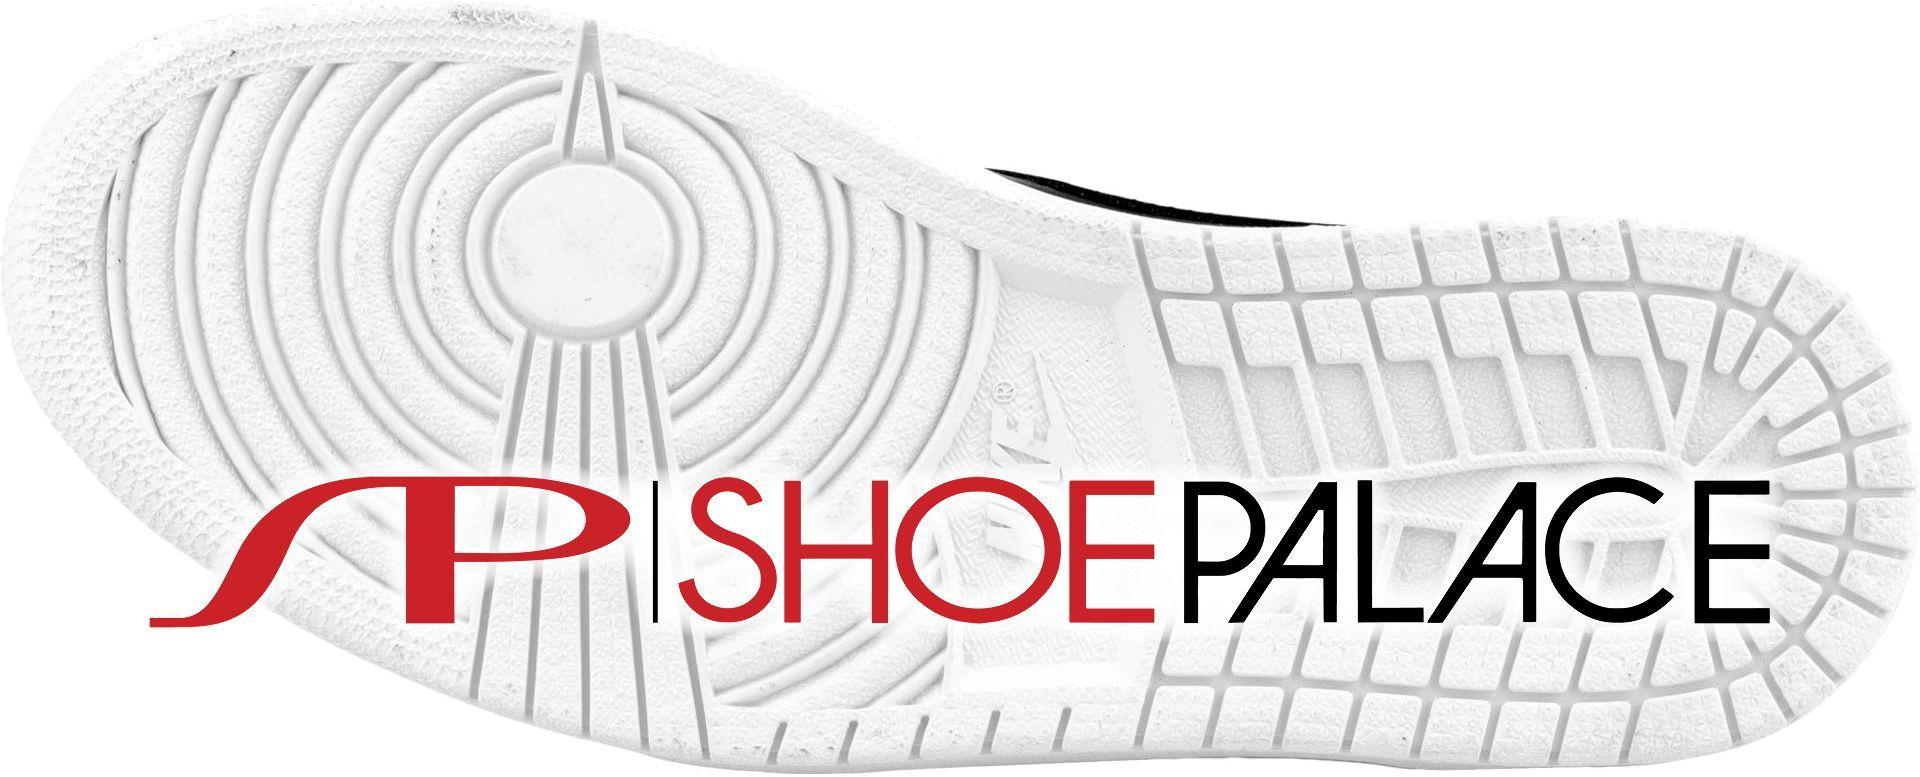 Shoe Palace Logo - Jordan 705329-010 Air Jordan Retro 1 Low OG Mens Basketball Shoe ...